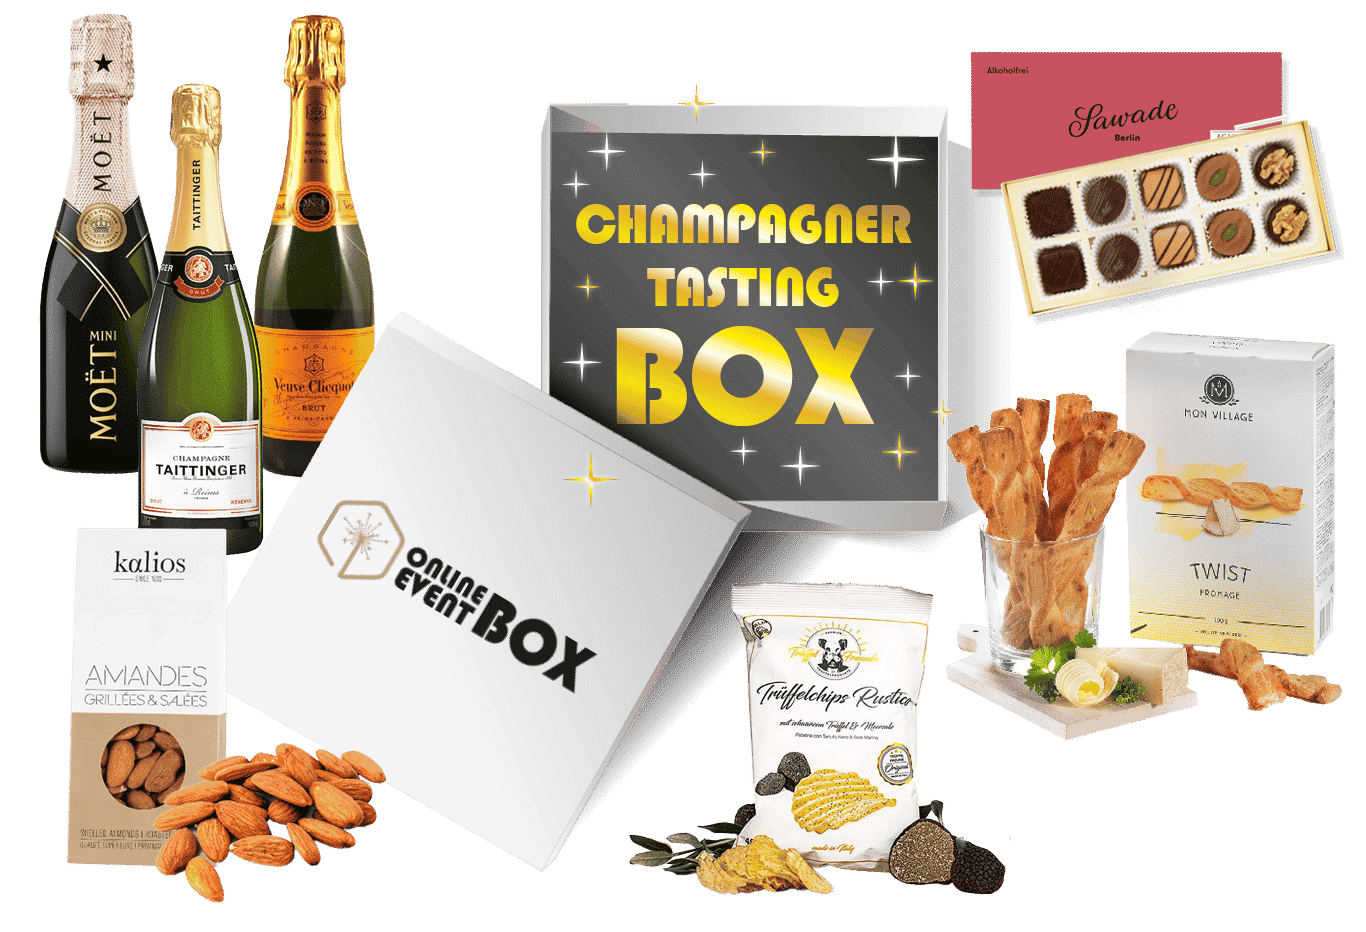 Champagner Tasting Box